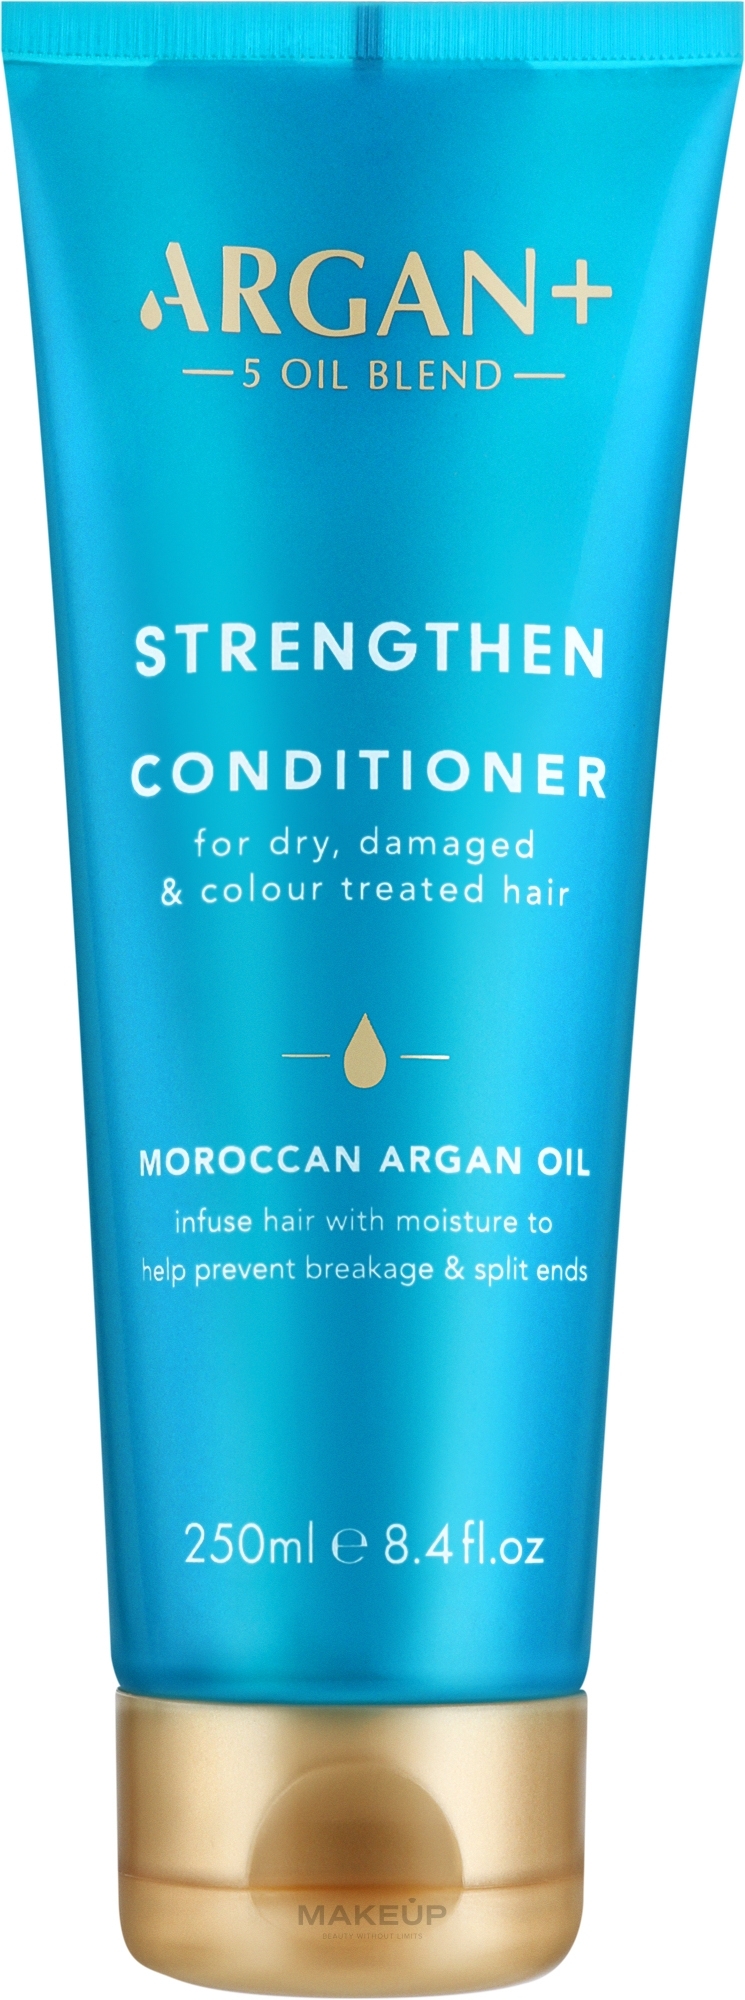 Кондиціонер для сухого, пошкодженого й фарбованого волосся - Argan+ Strengthen Conditioner Morocco Argan Oil — фото 250ml